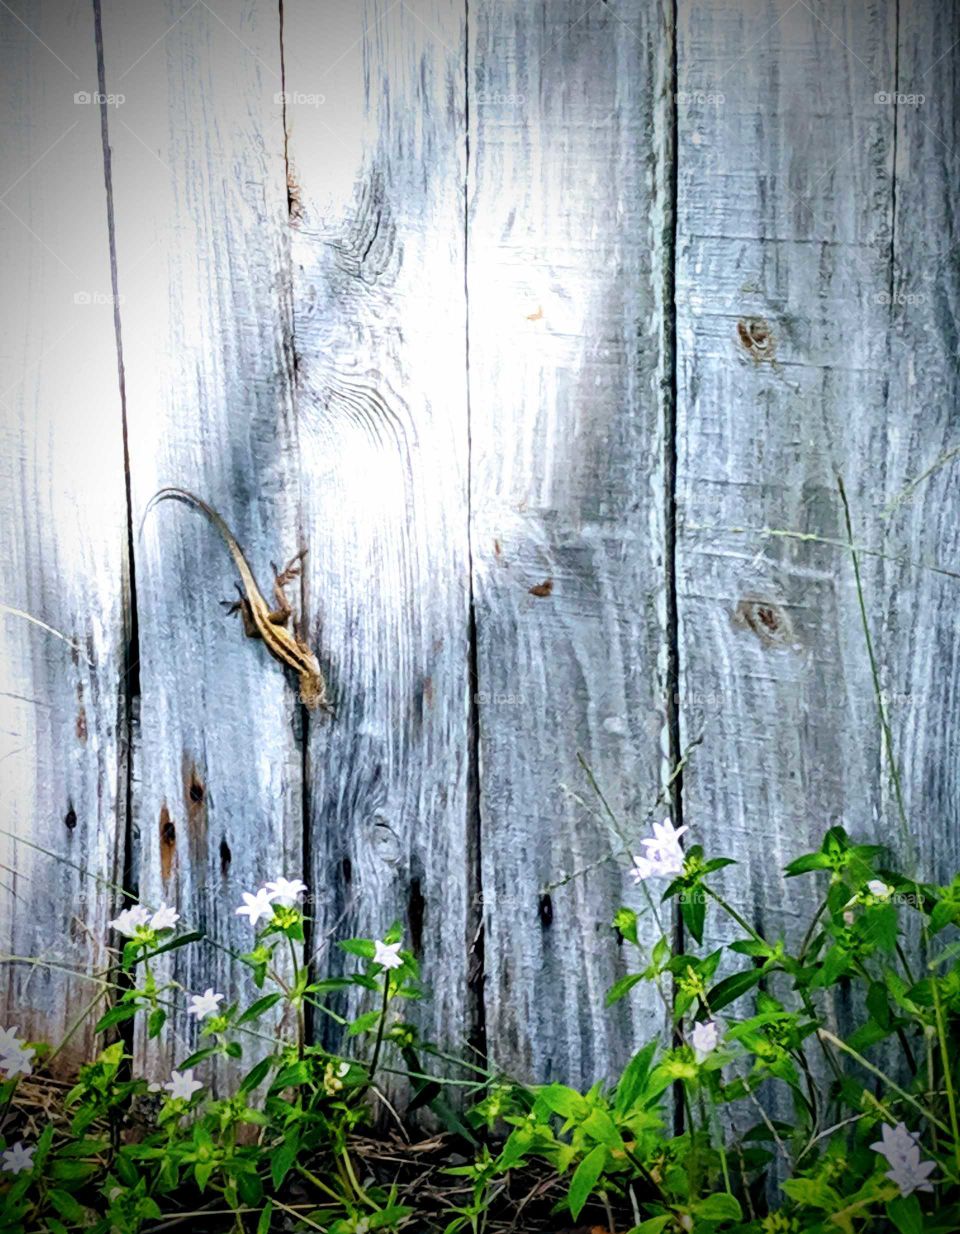 Lizard on a fence